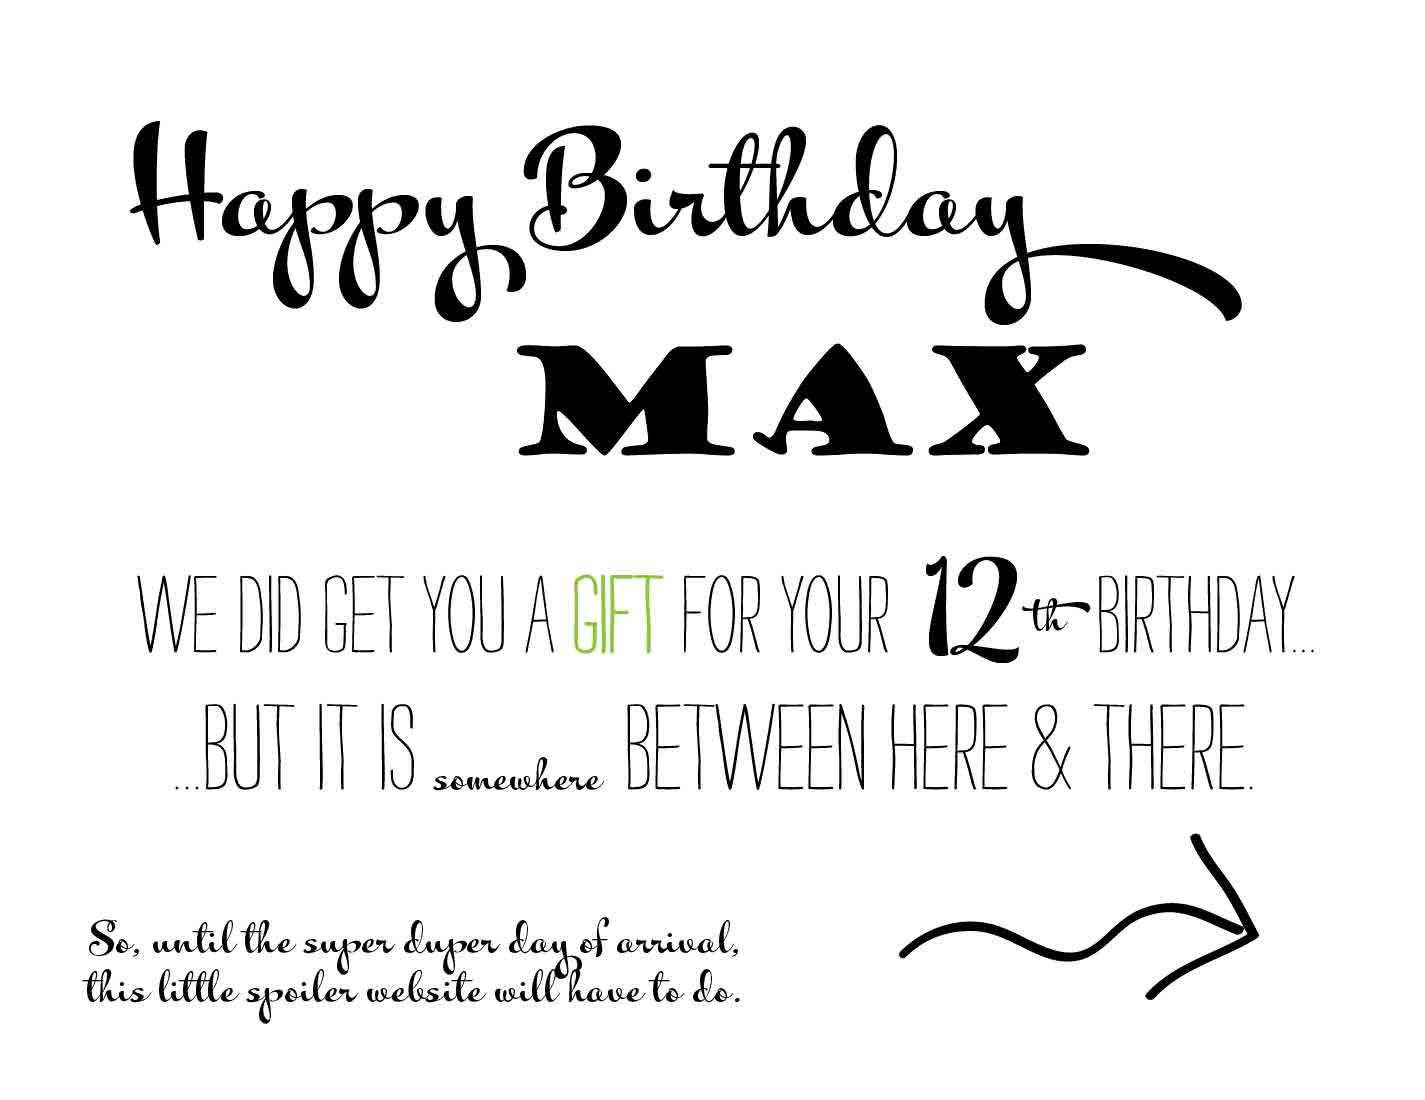 Happy Birthday Max